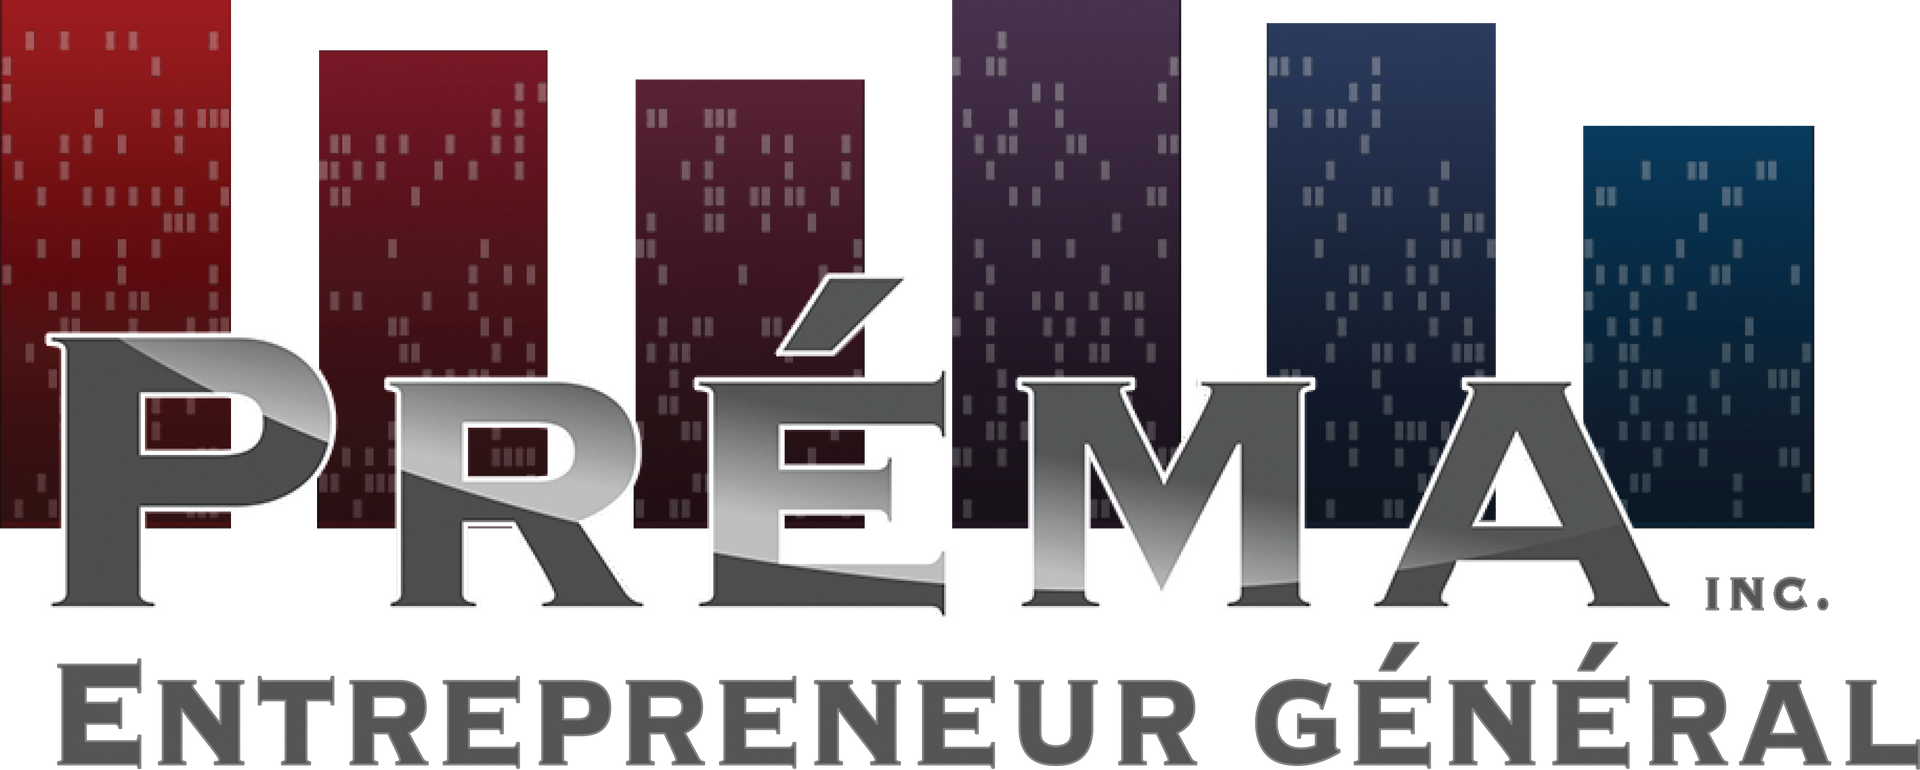 A logo for a company called premia entrepreneur general